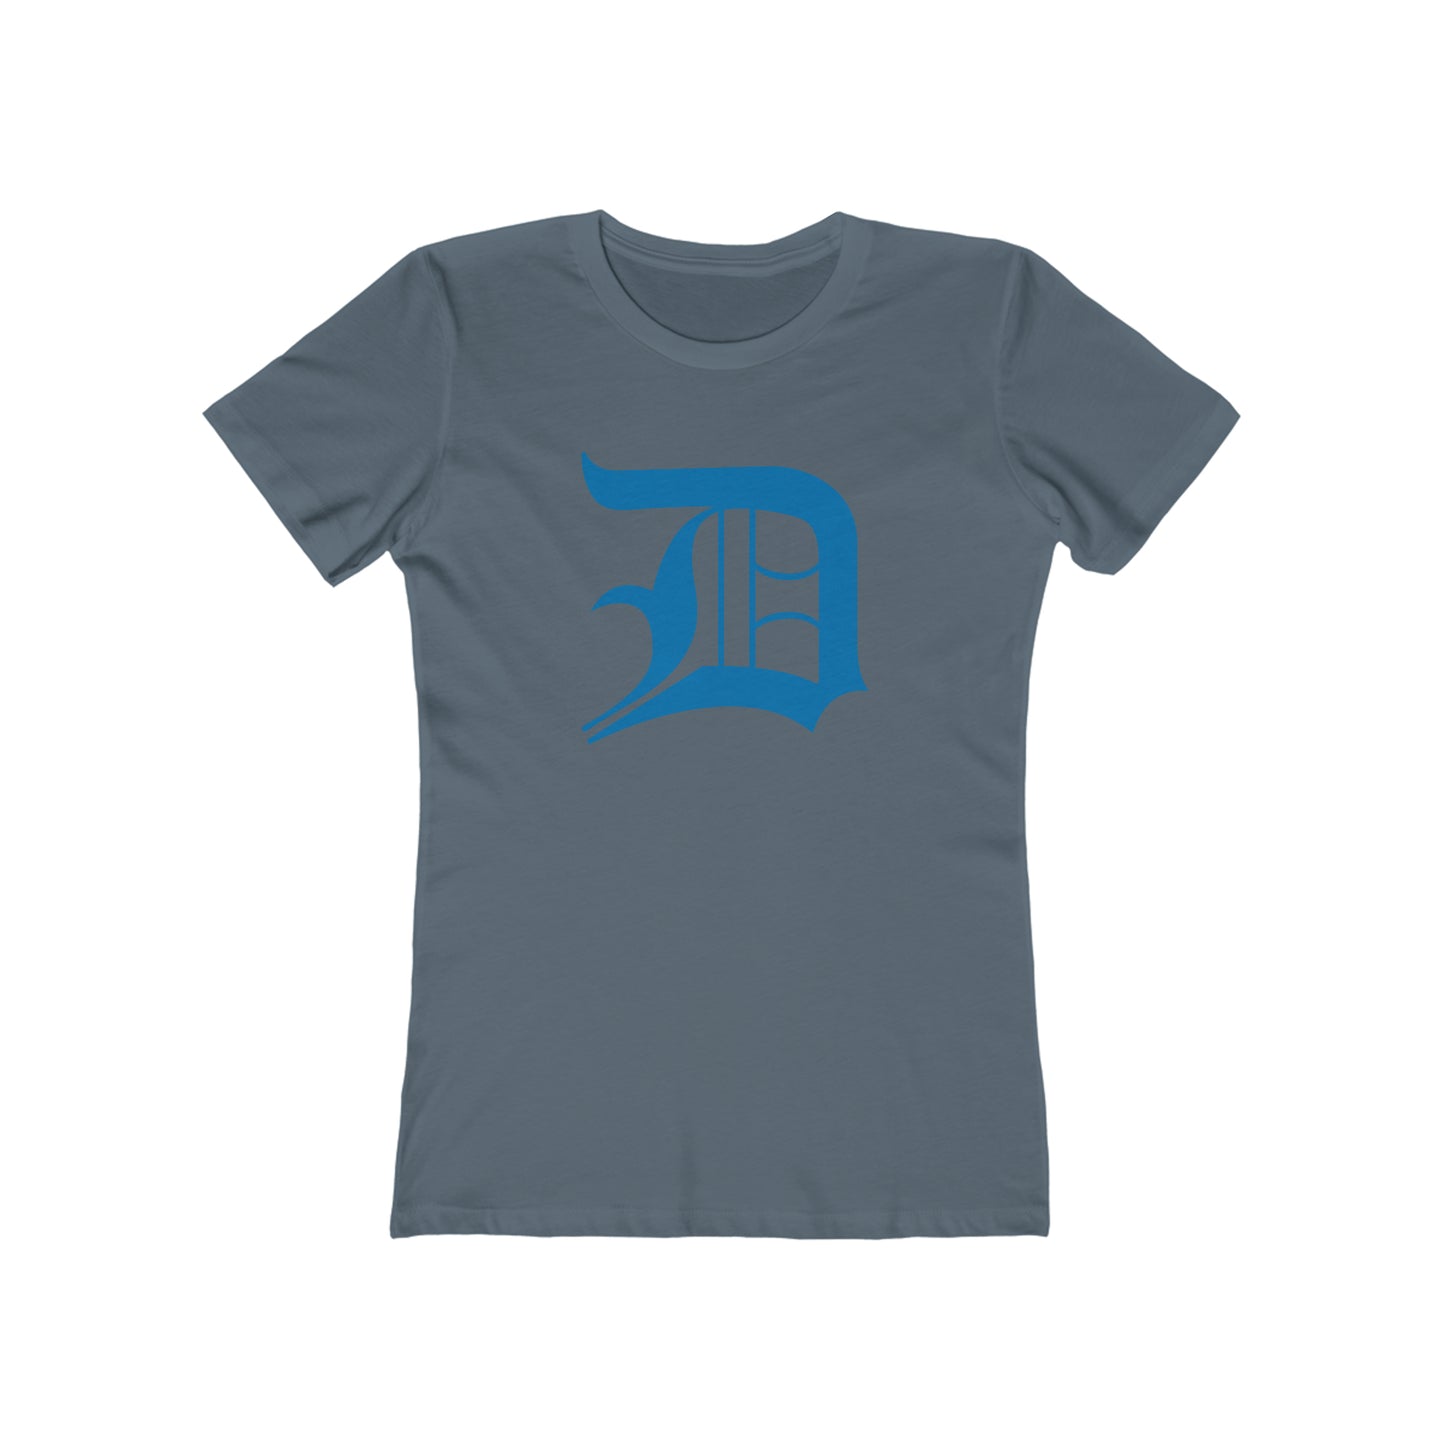 Detroit 'Old English D' T-Shirt (Azure) | Women's Boyfriend Cut